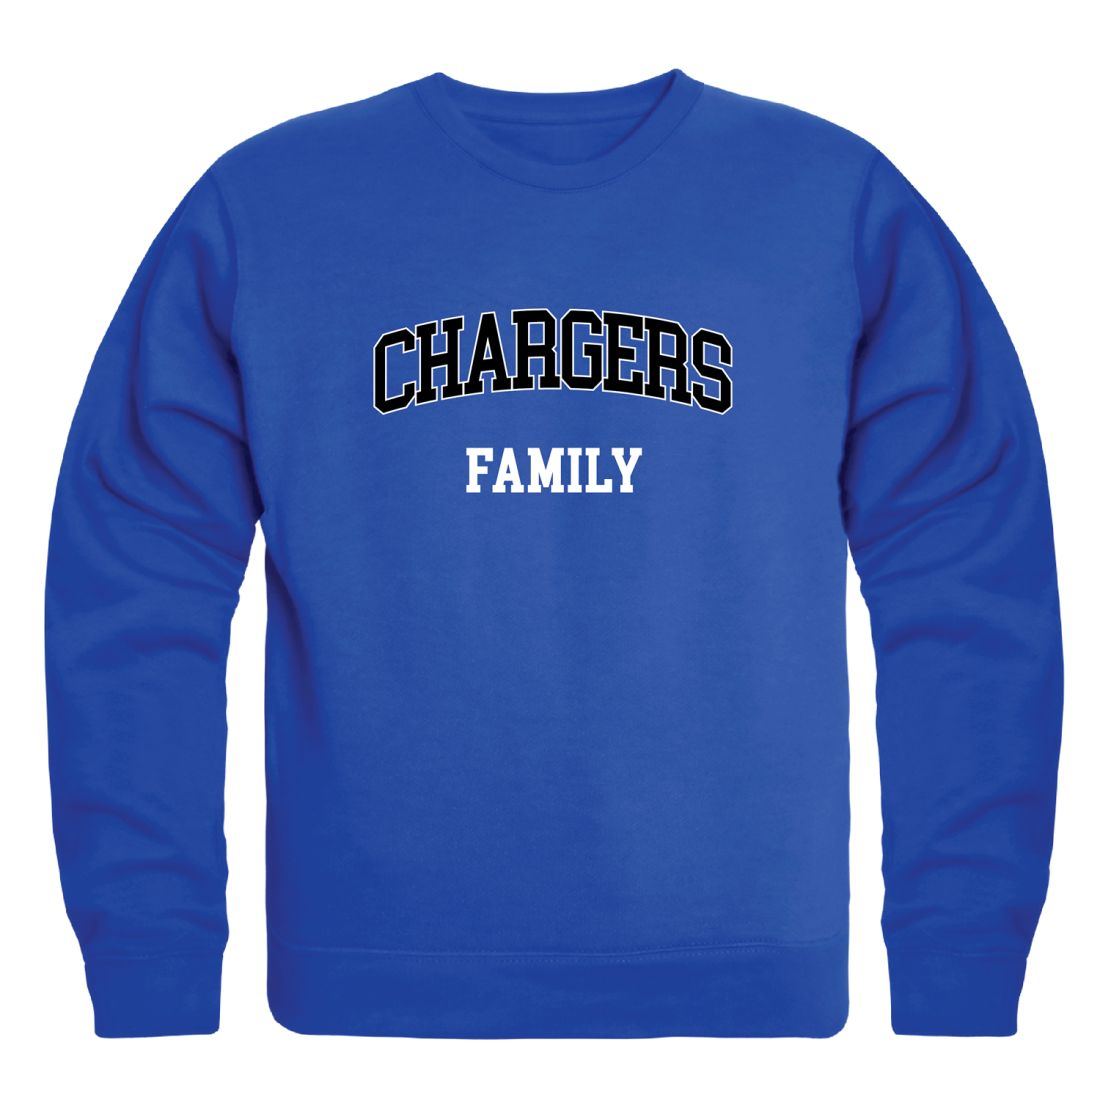 The-University-of-Alabama-in-Huntsville-Chargers-Family-Fleece-Crewneck-Pullover-Sweatshirt